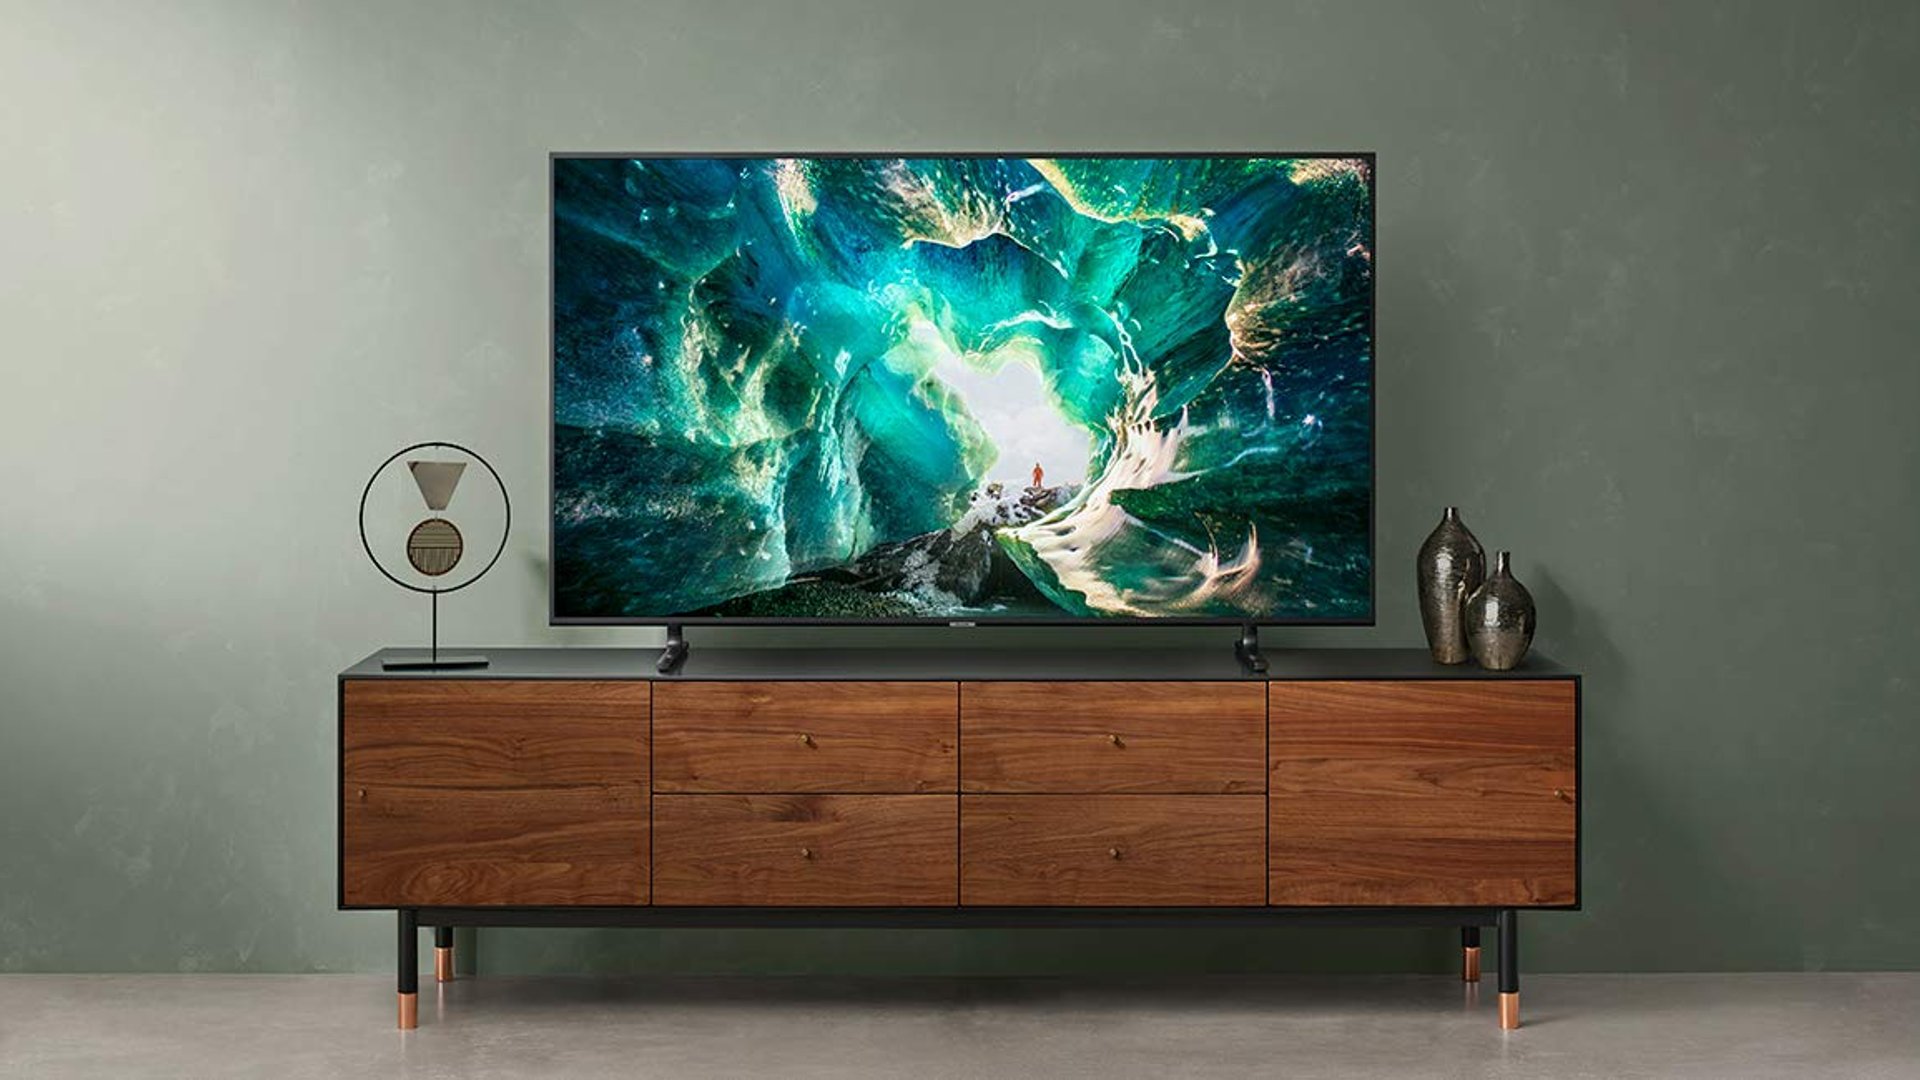 Samsung 85 inch Ultra HD Crystal 4K LED Smart TV 2022